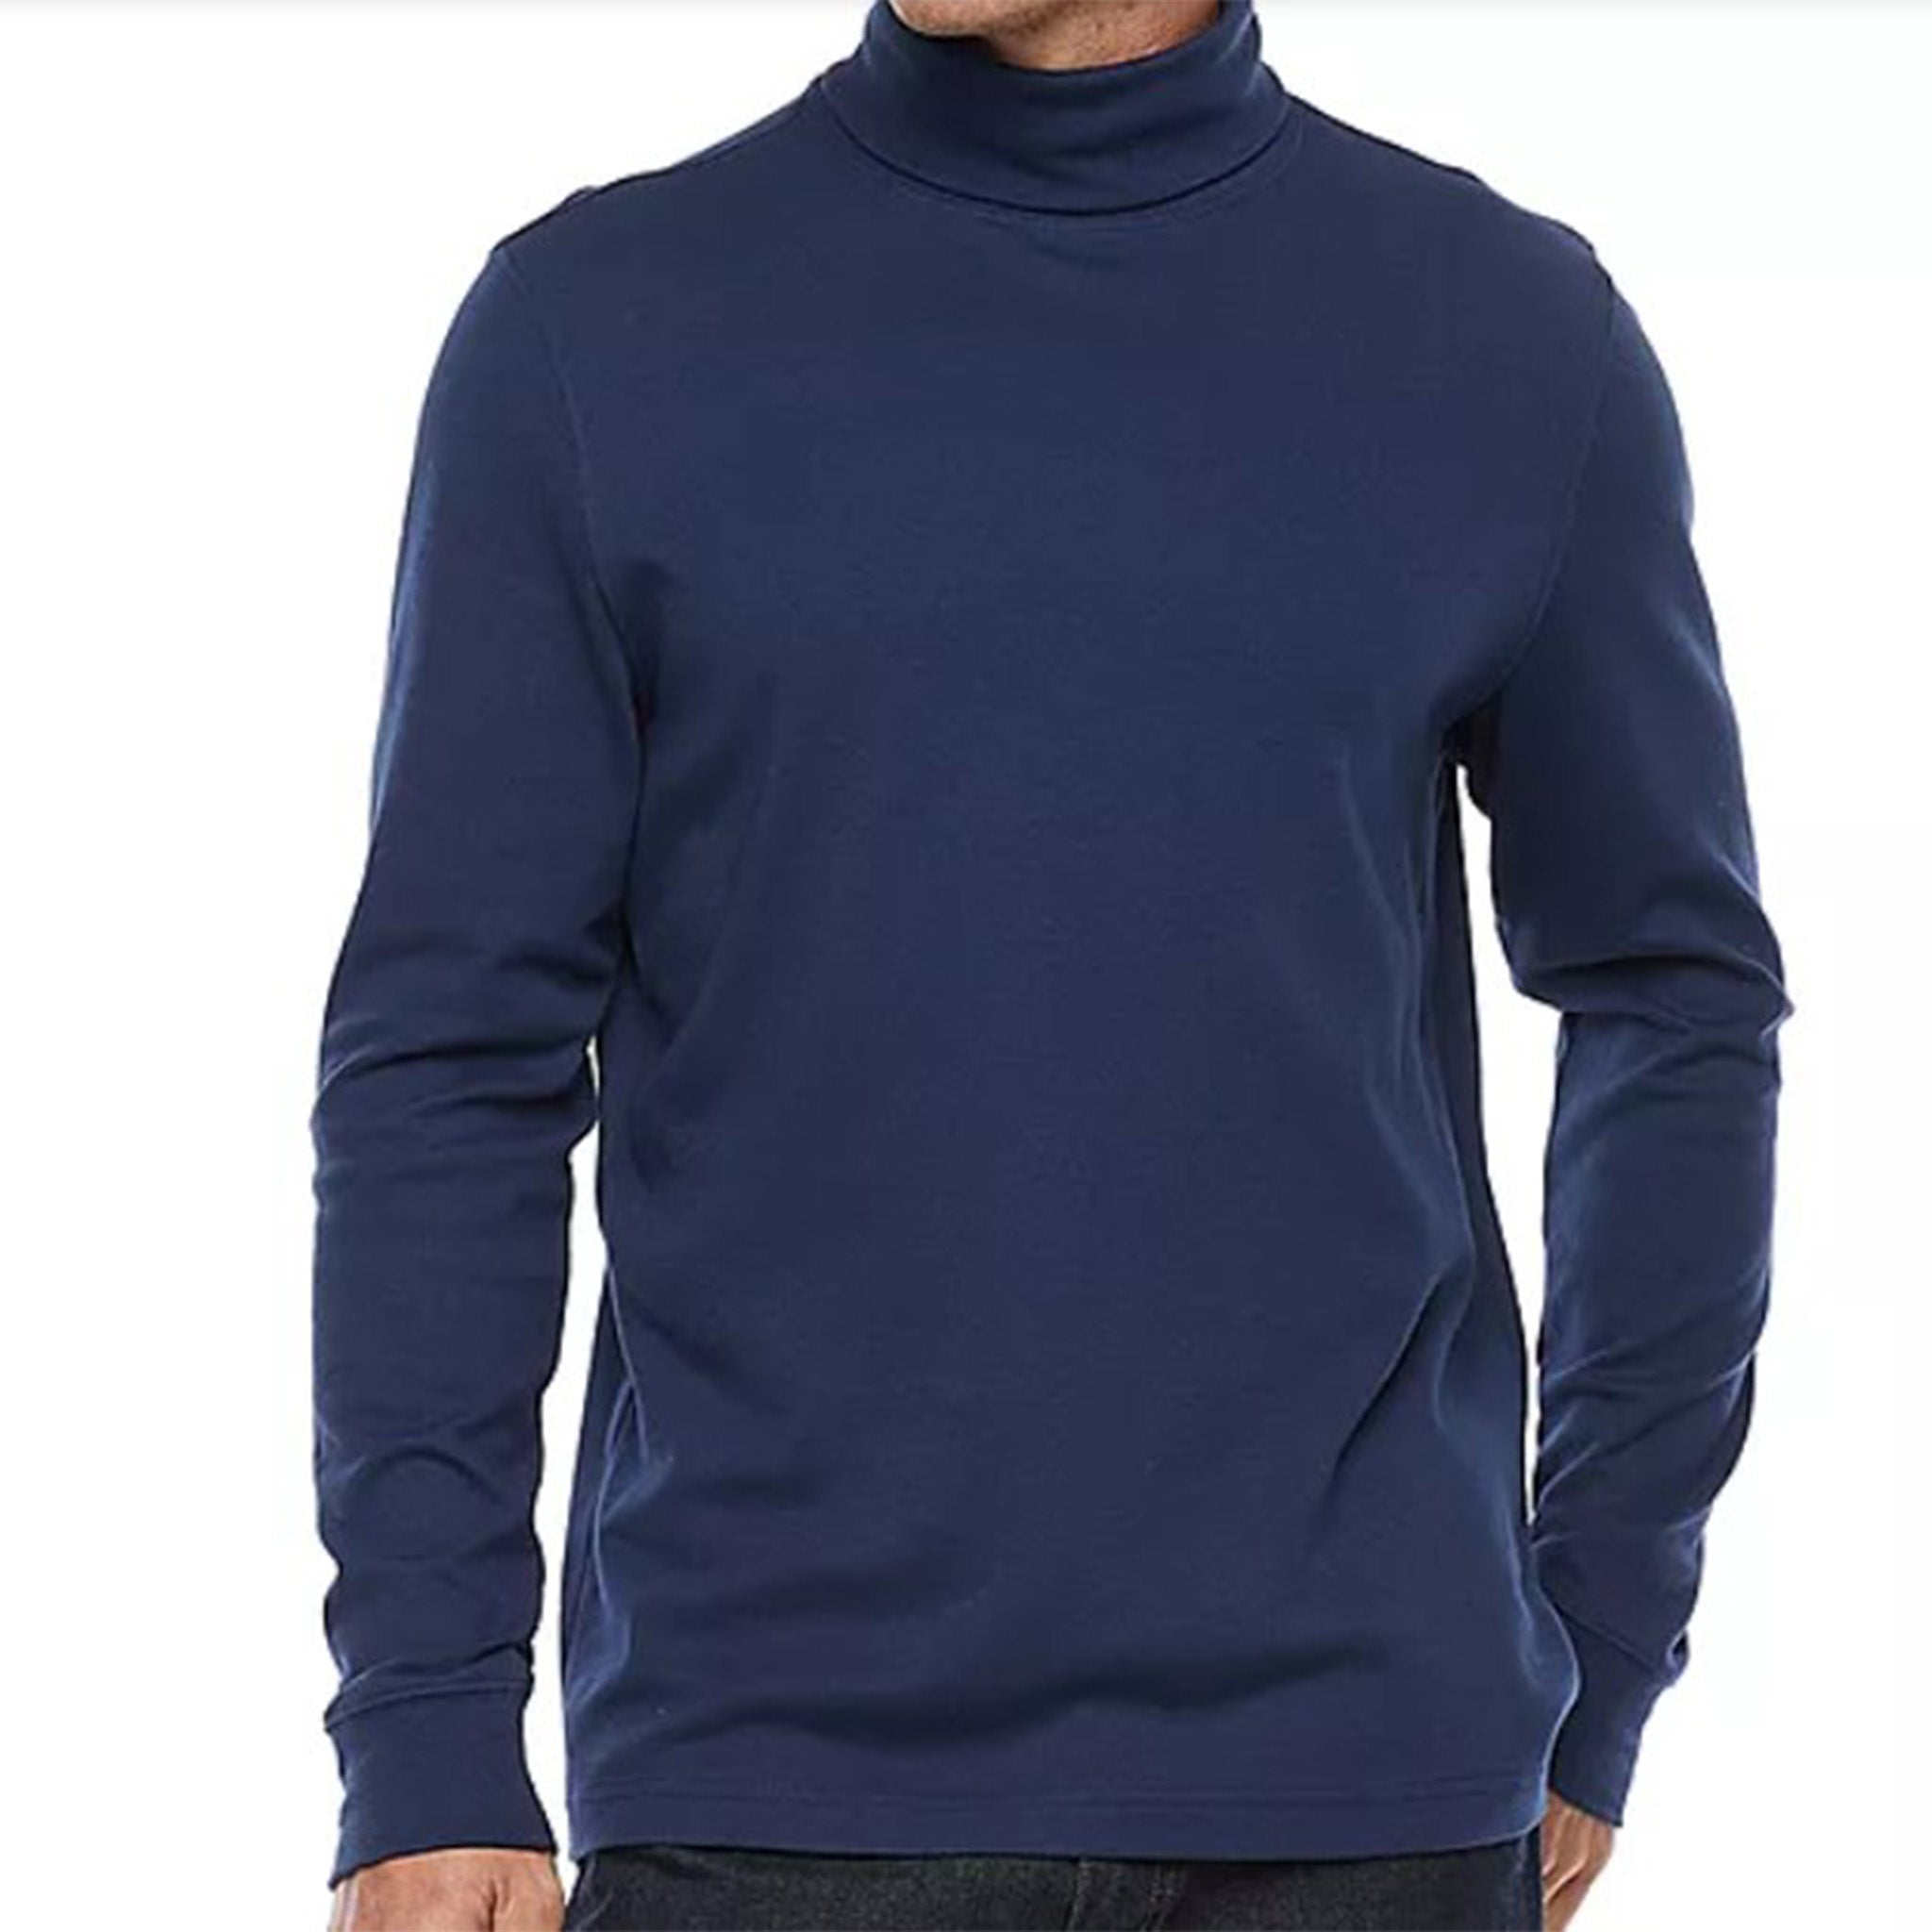 Men's Navy Turtle Neck Sweater